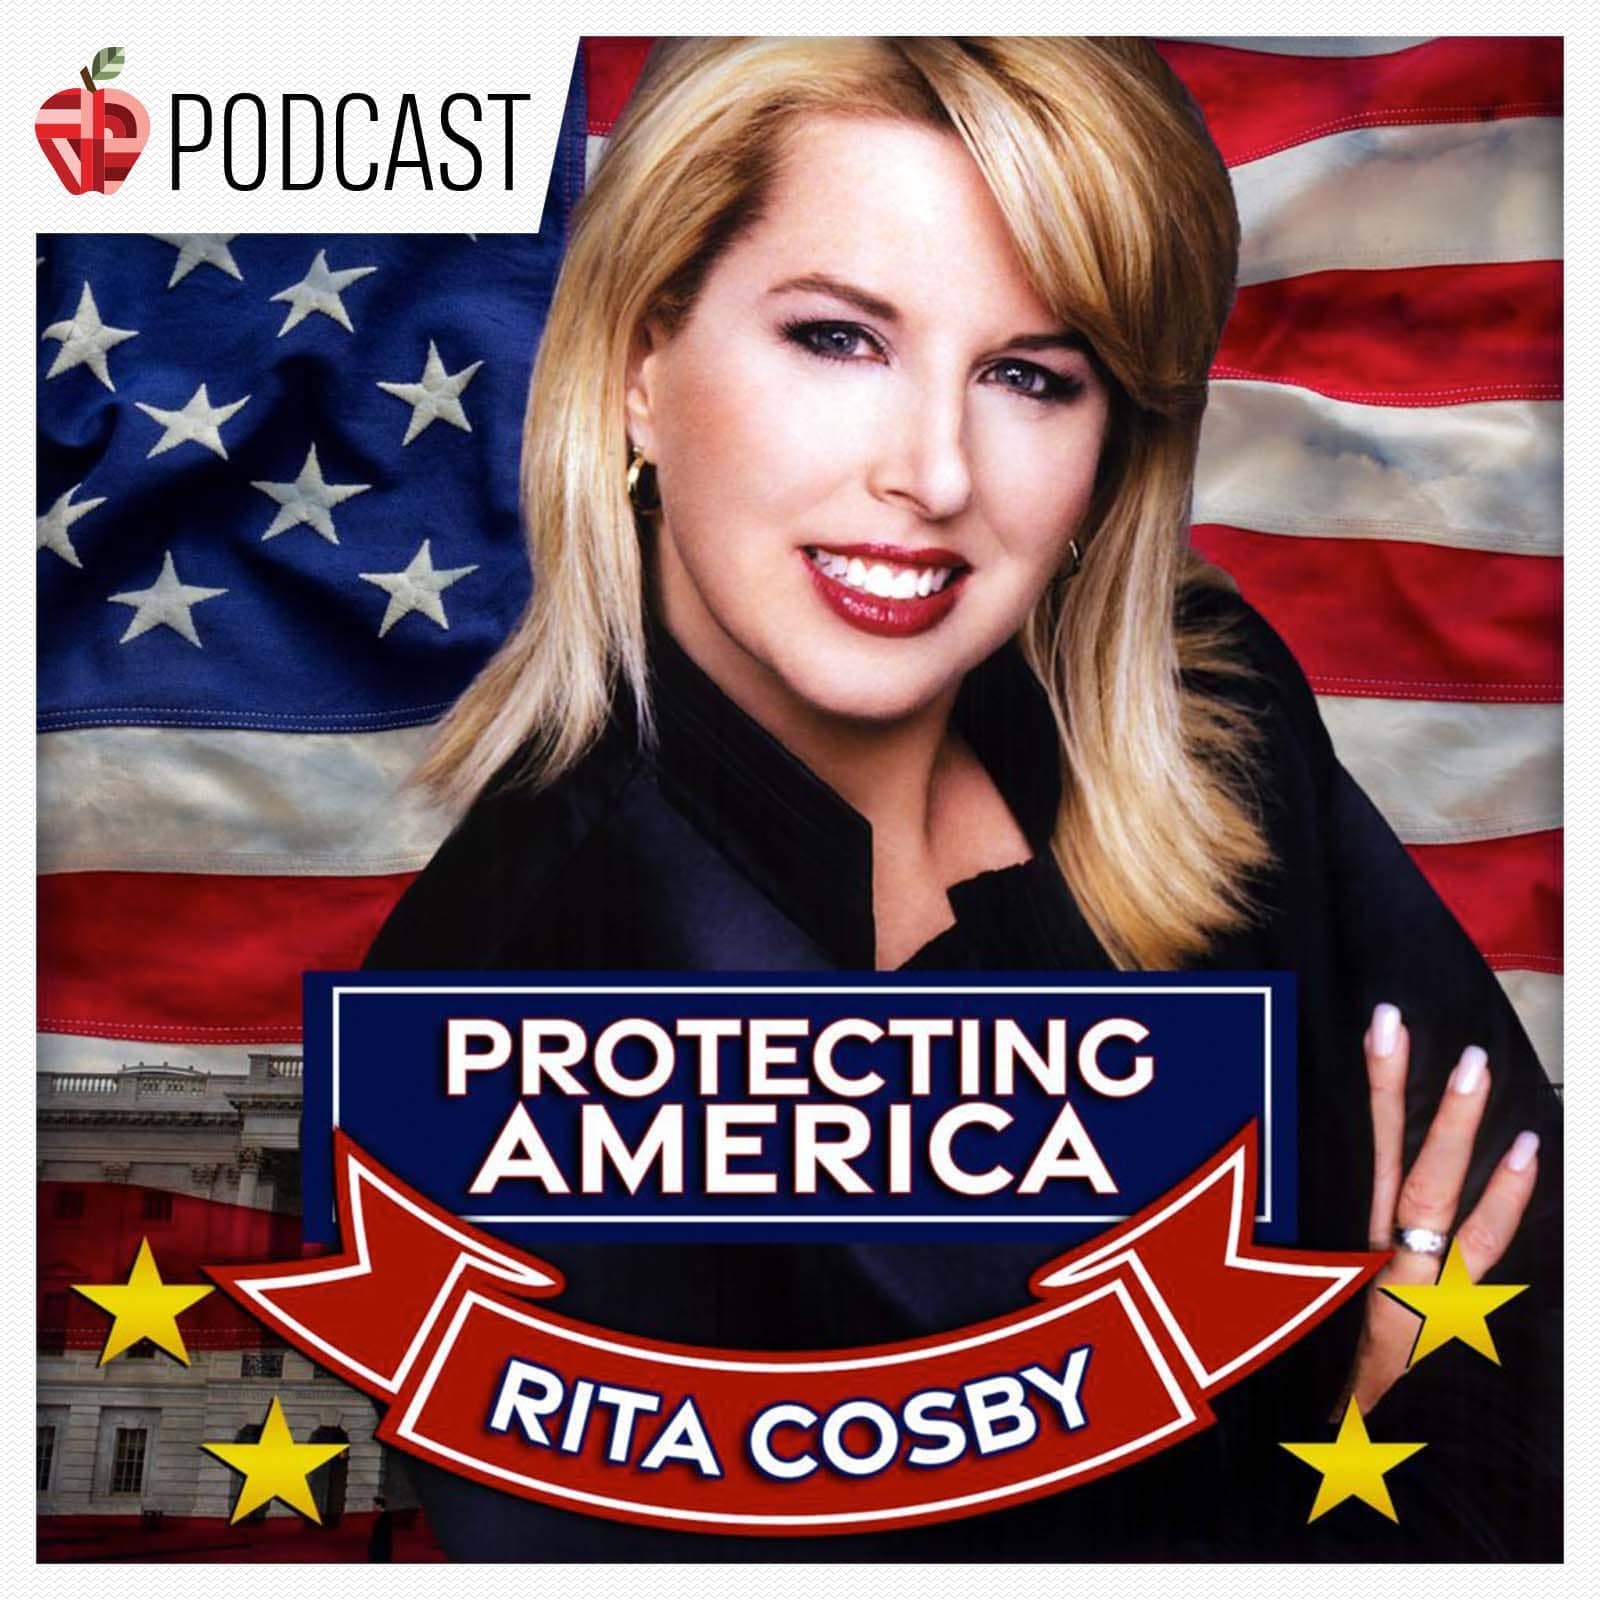 rita-cosby-protecting-america-correct-podcast-new-logo-2